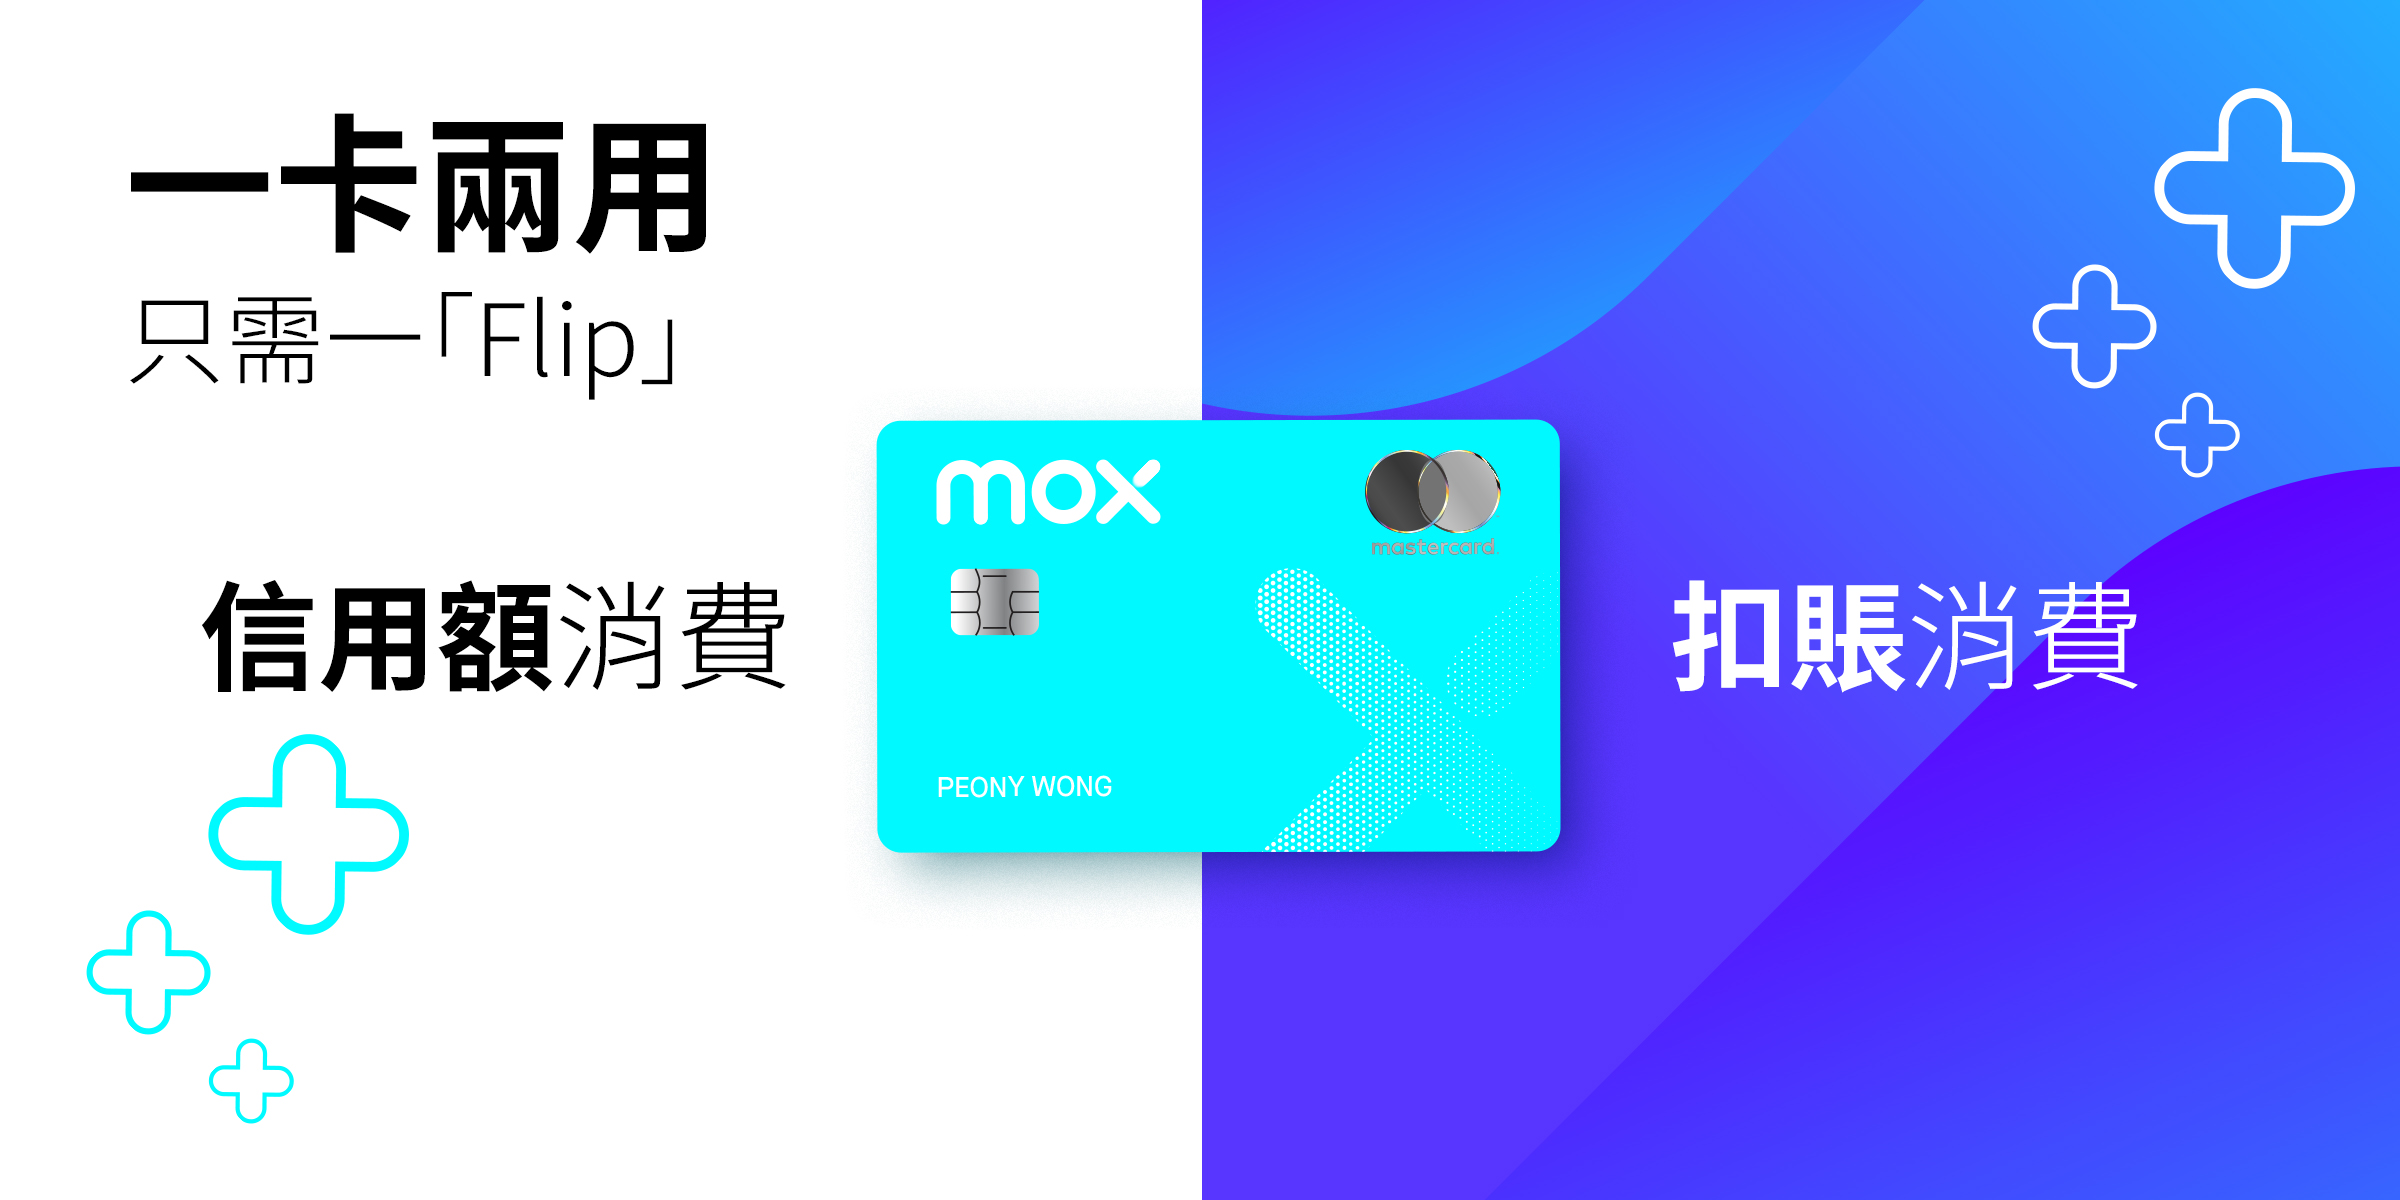 Mox與Mastercard於全功能Mox Card上推出創新功能「Flip」   讓客戶自由轉換扣賬及信用額模式消費 